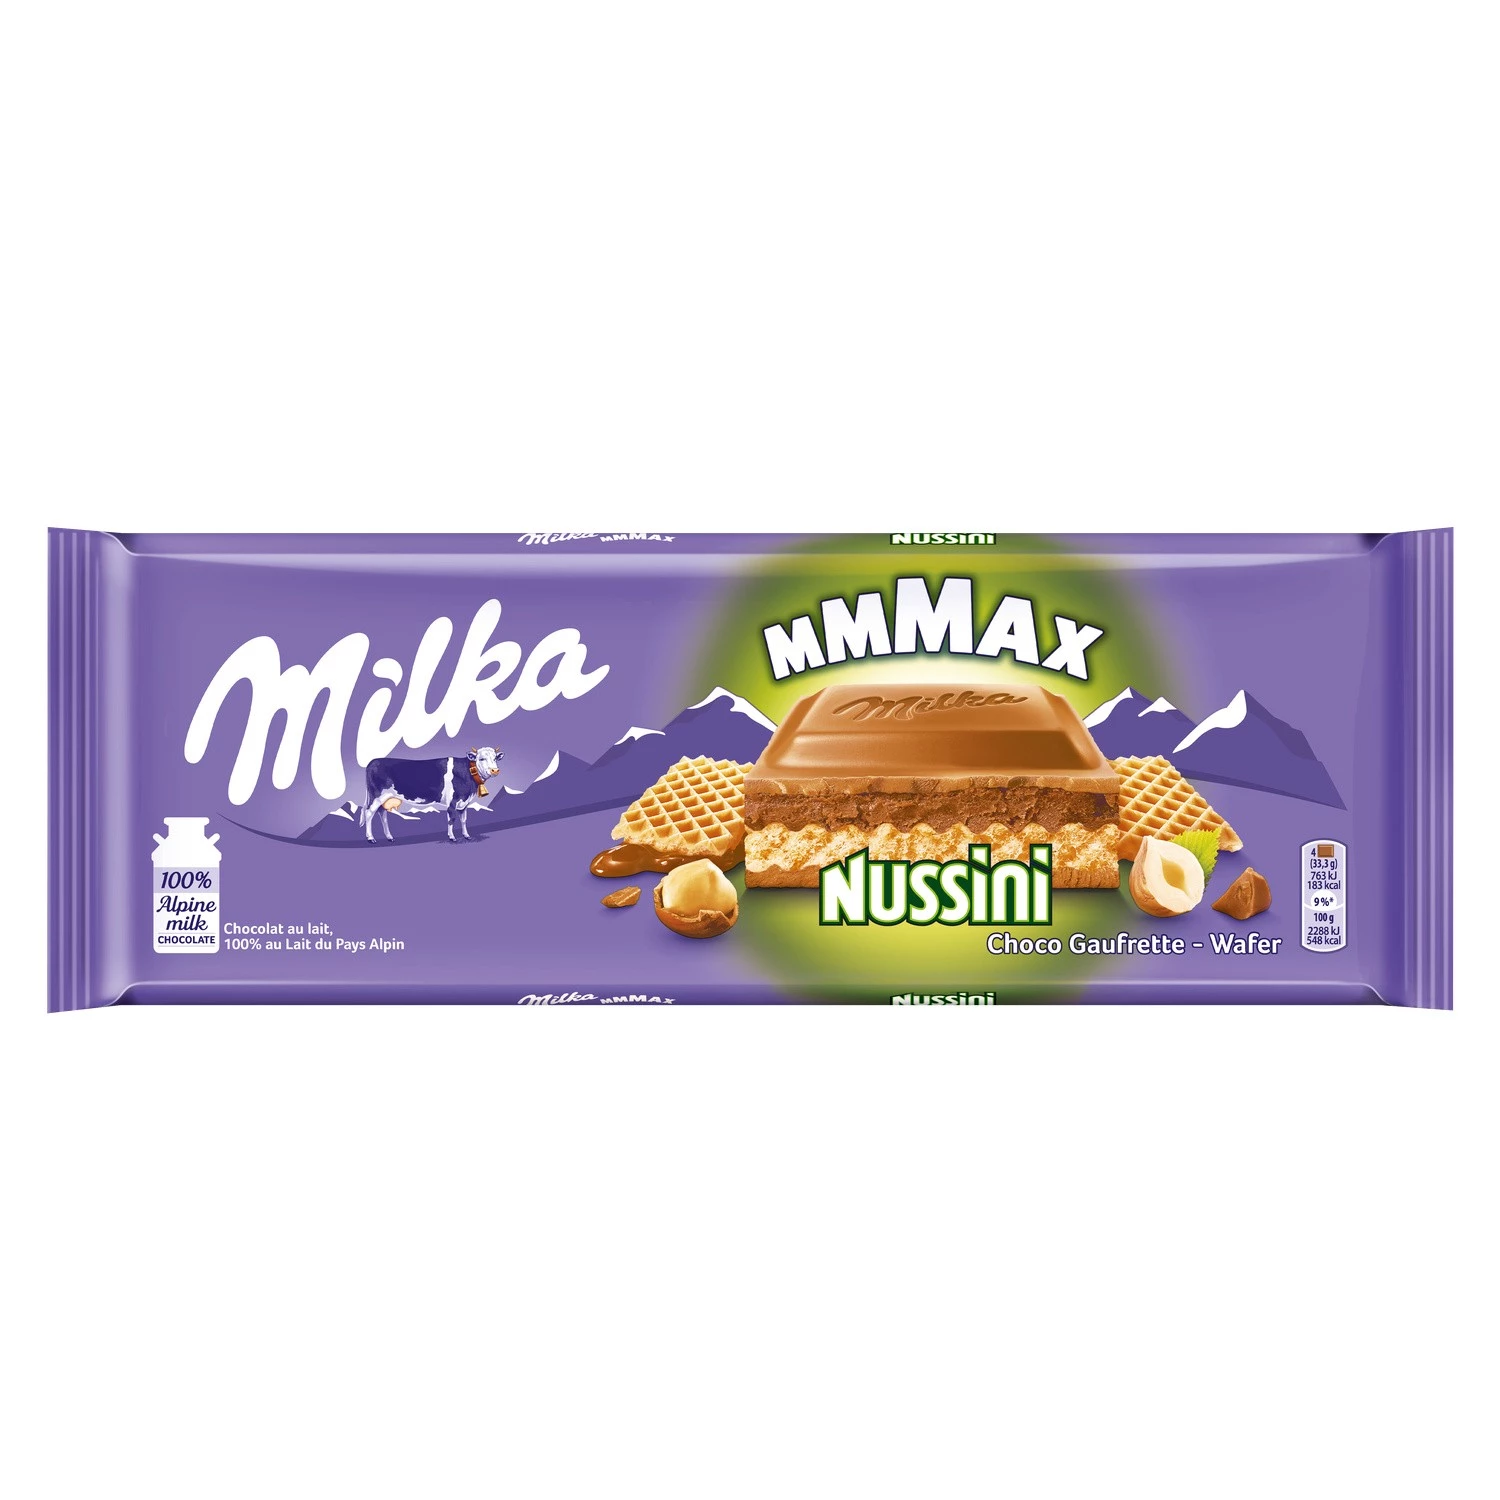 Tablette de chocolat nussini MMMAX 300g - MILKA